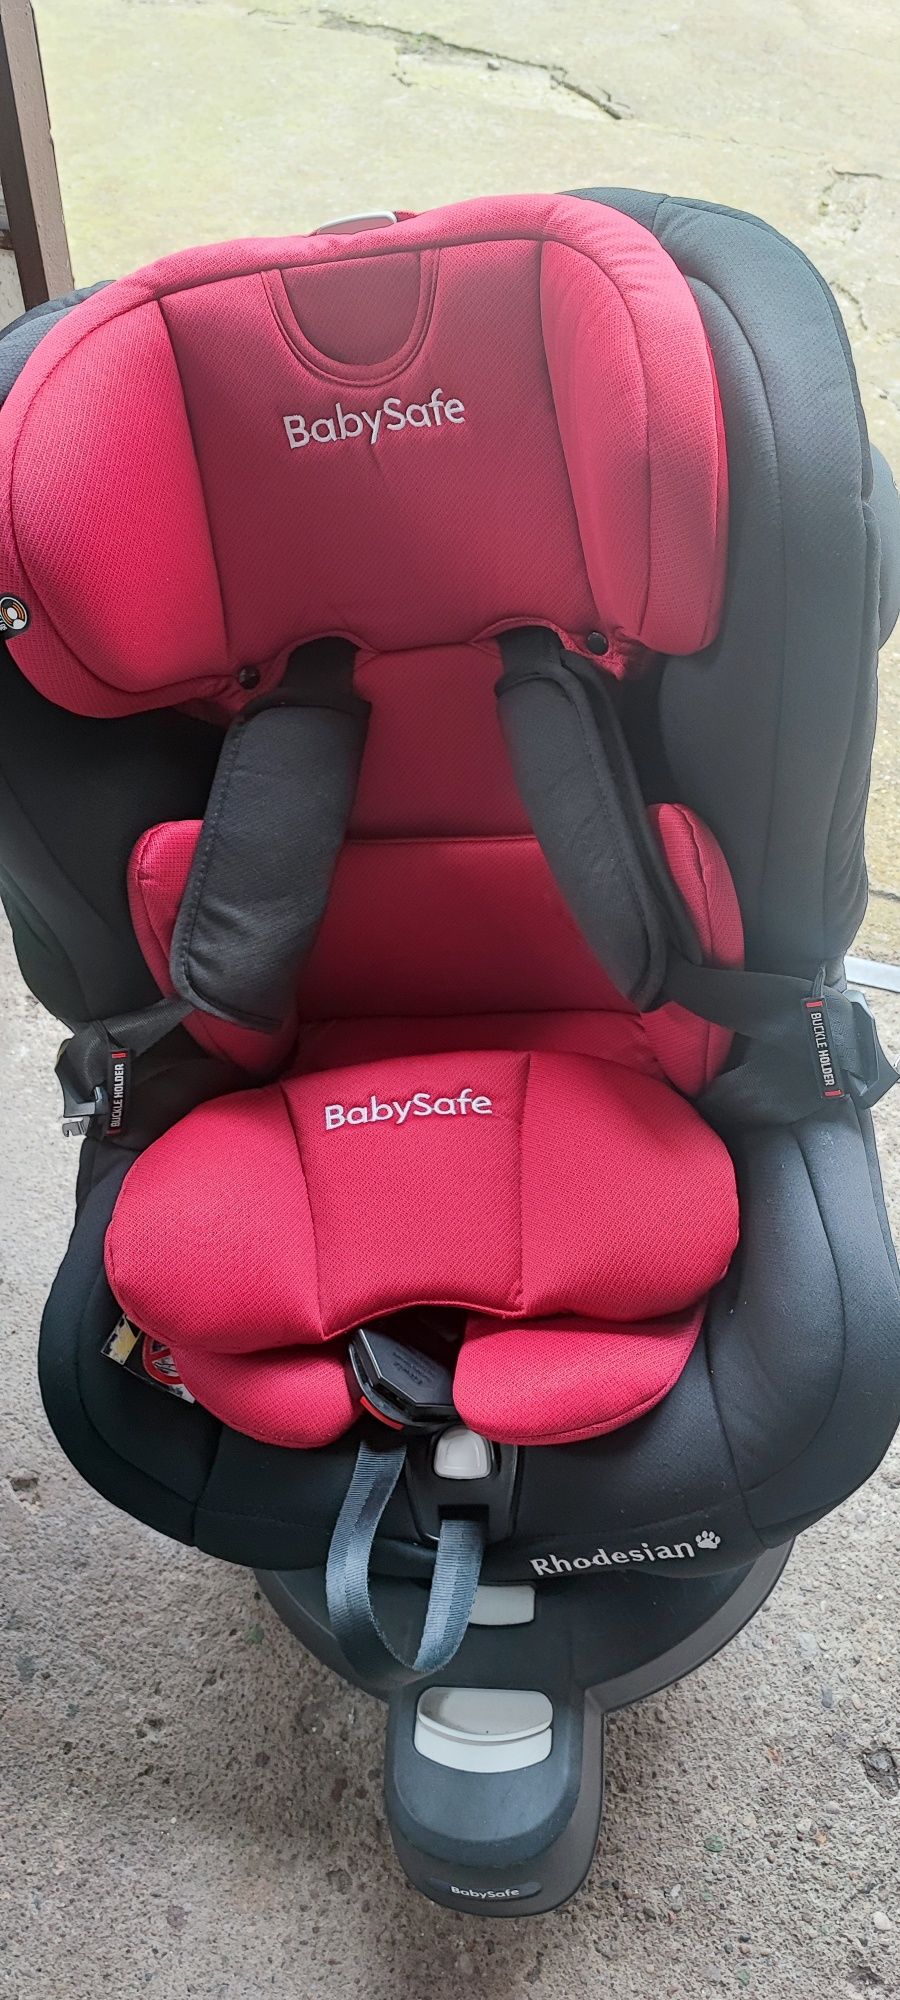 Fotelik samochodowy BabySafe Rhodesian 0-18kg